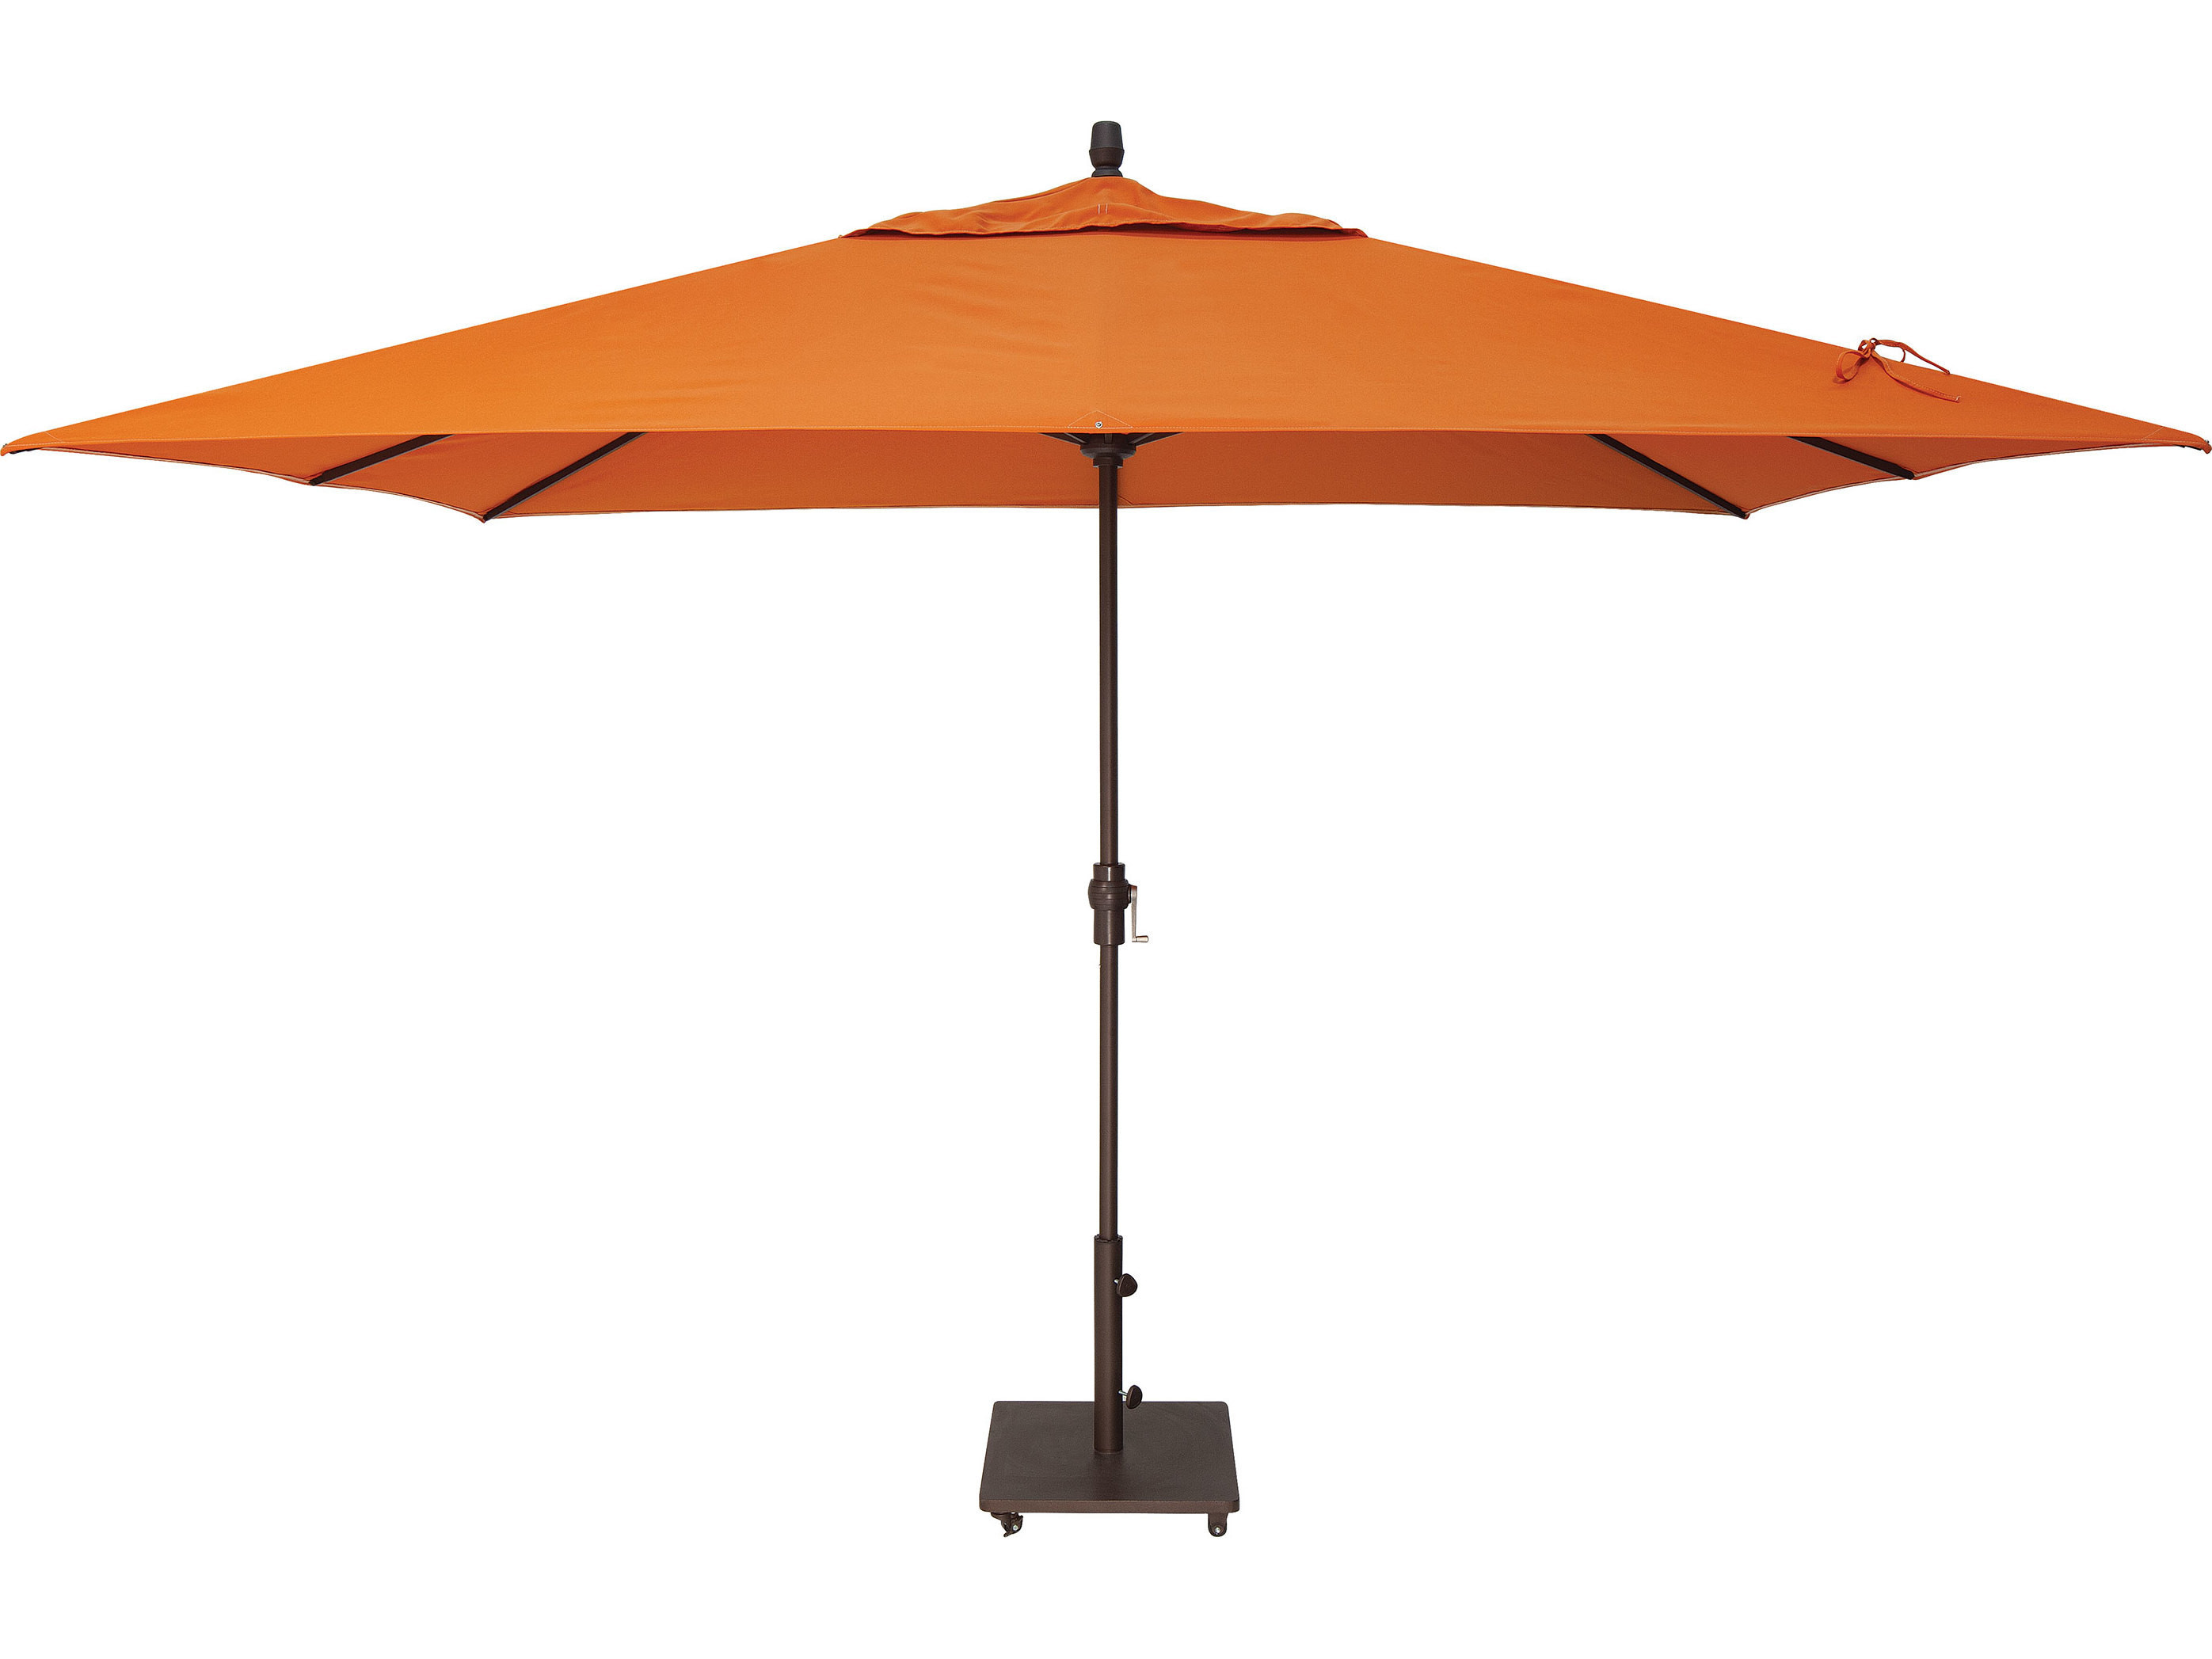 Best ideas about Rectangle Patio Umbrella
. Save or Pin Treasure Garden Market Aluminum 8 x 11 Crank Lift Now.